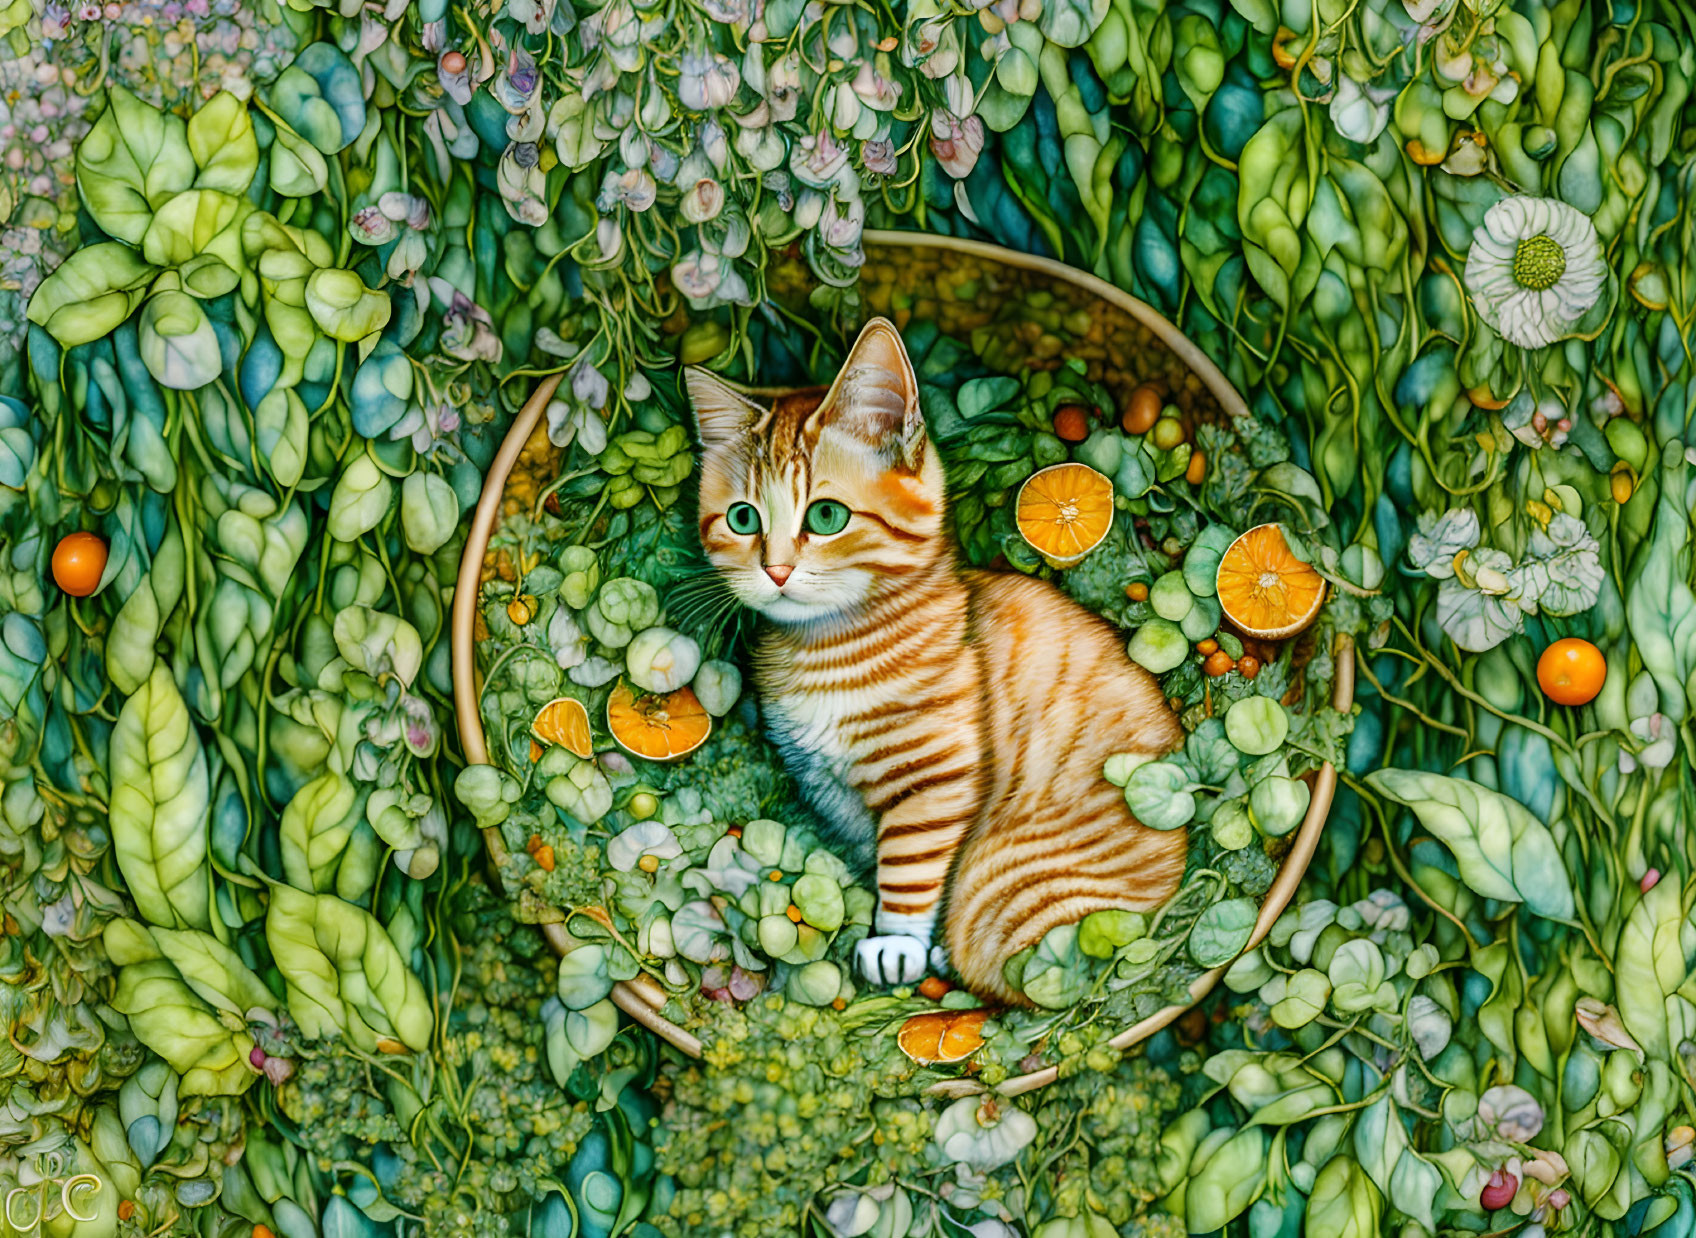 Orange Tabby Kitten Among Green Foliage and Oranges